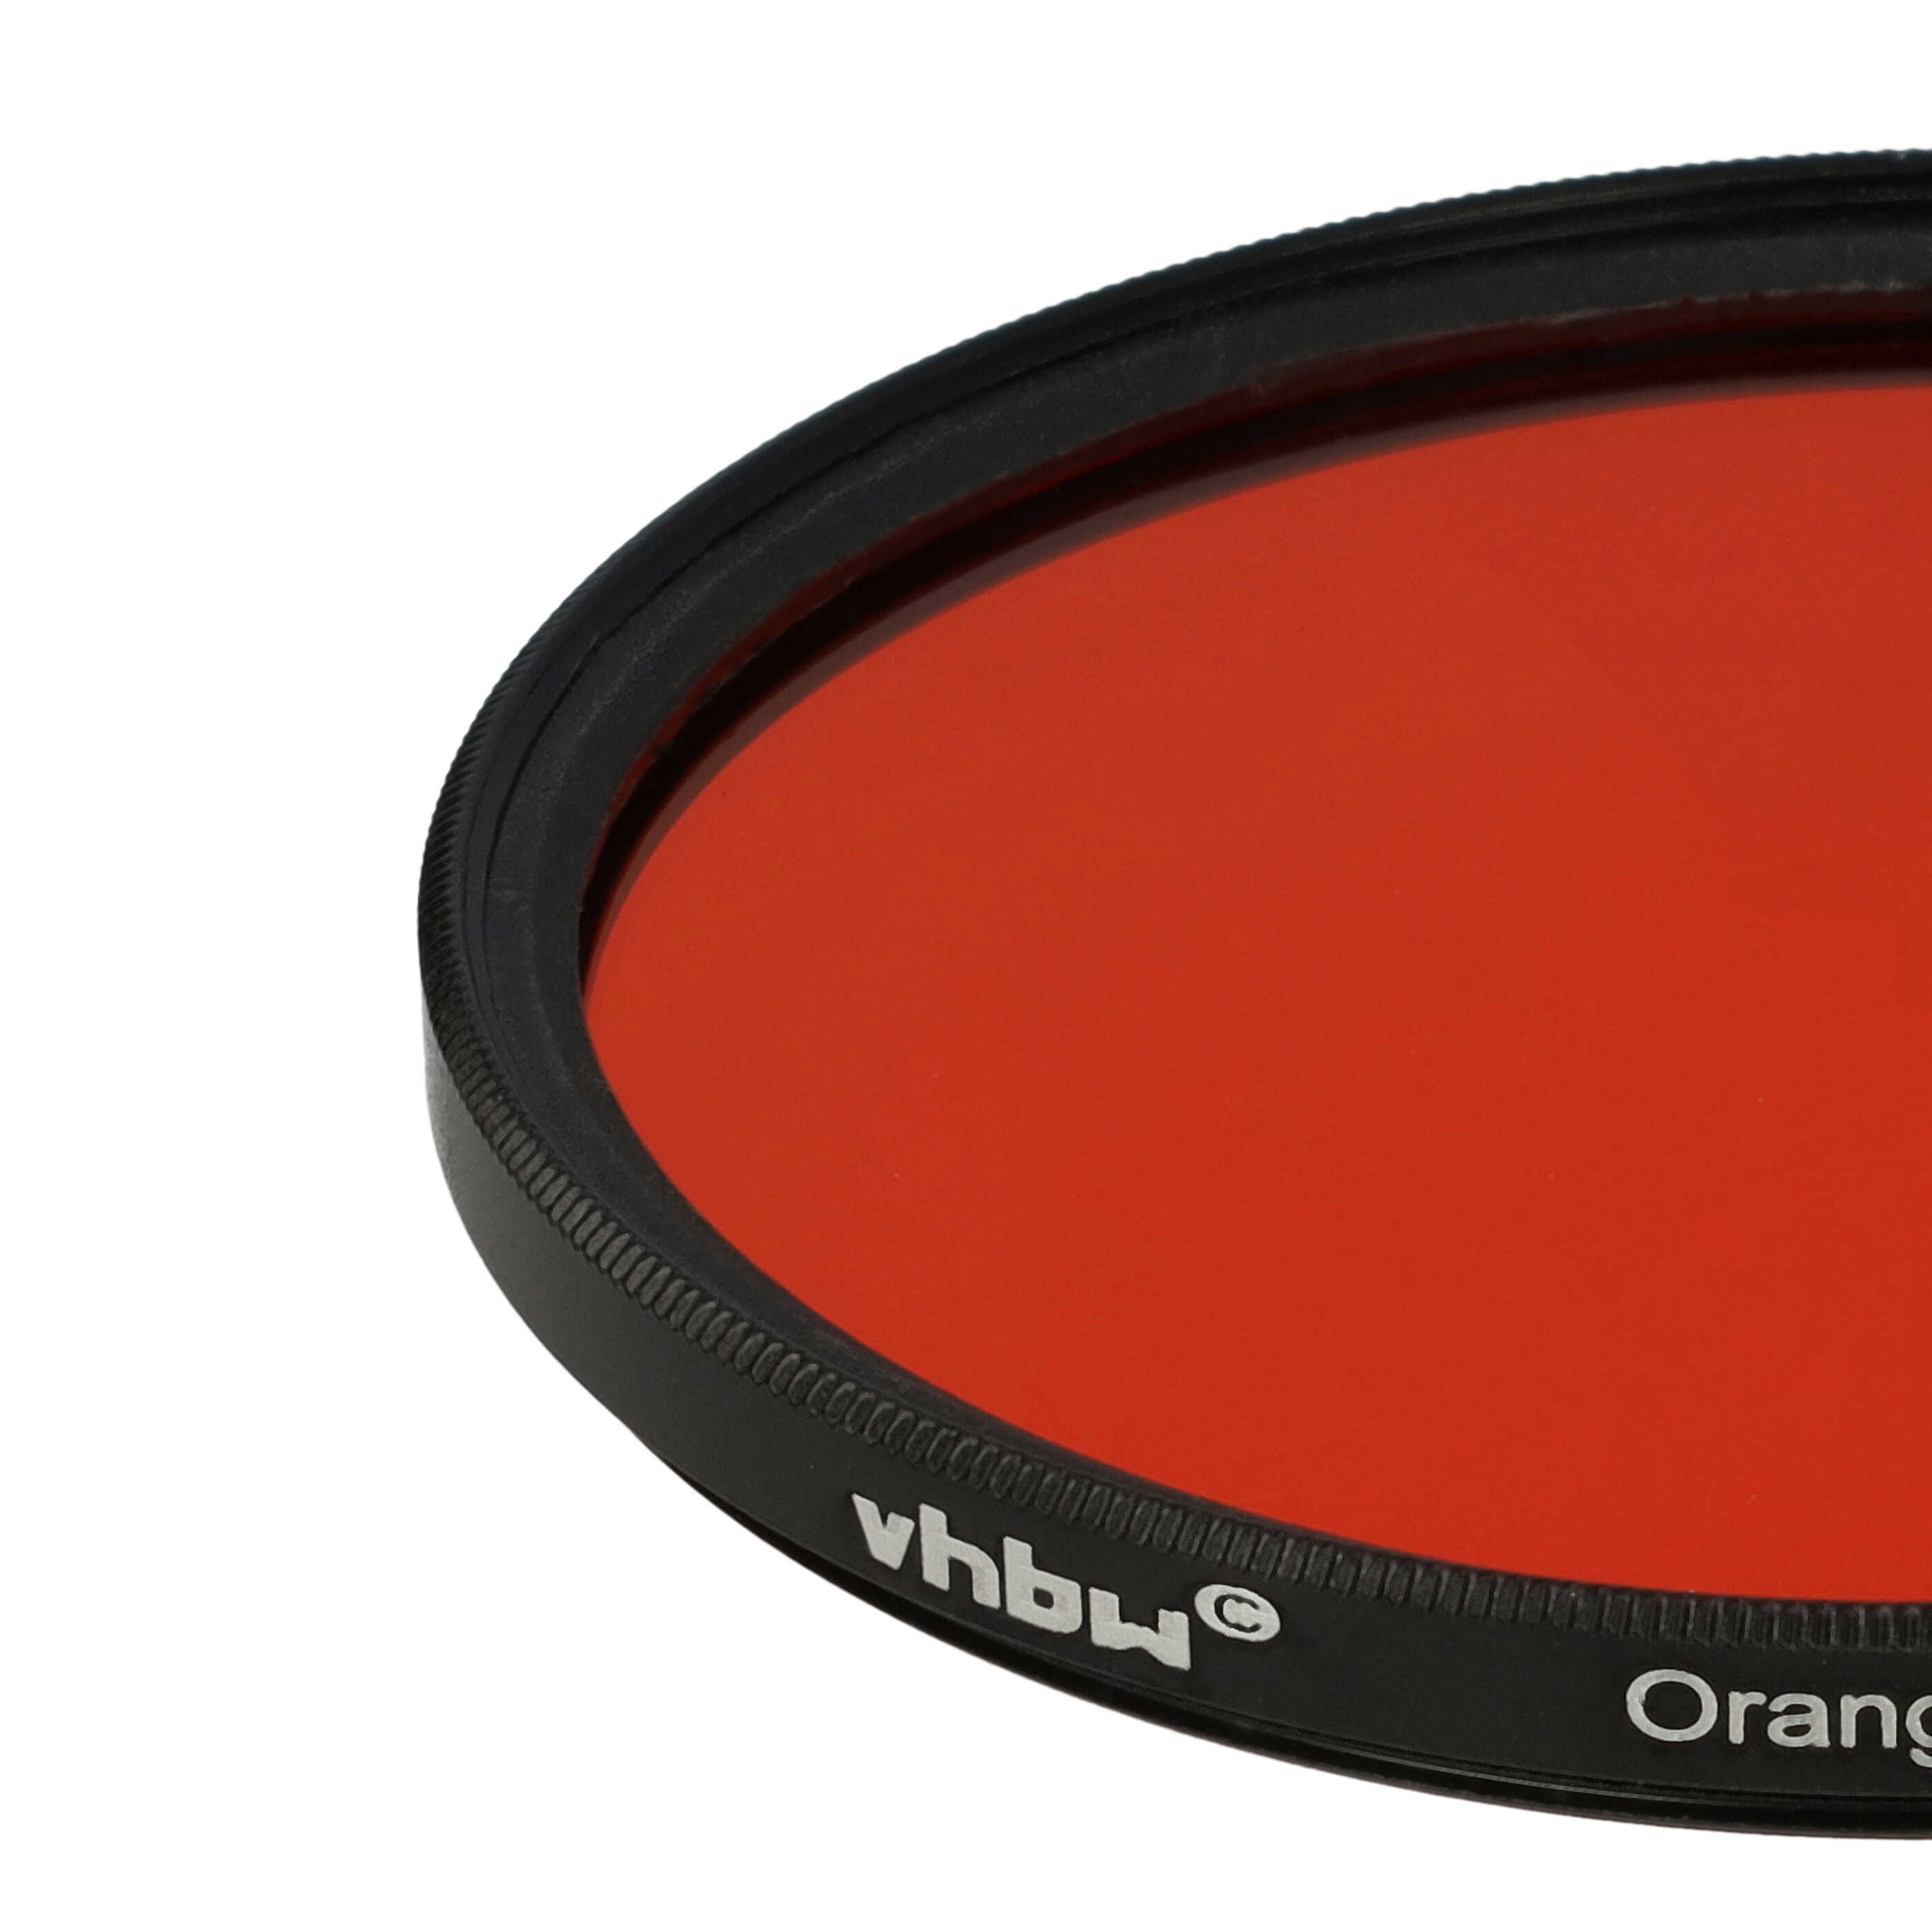 Coloured Filter, Orange suitable for Camera Lenses with 67 mm Filter Thread - Orange Filter